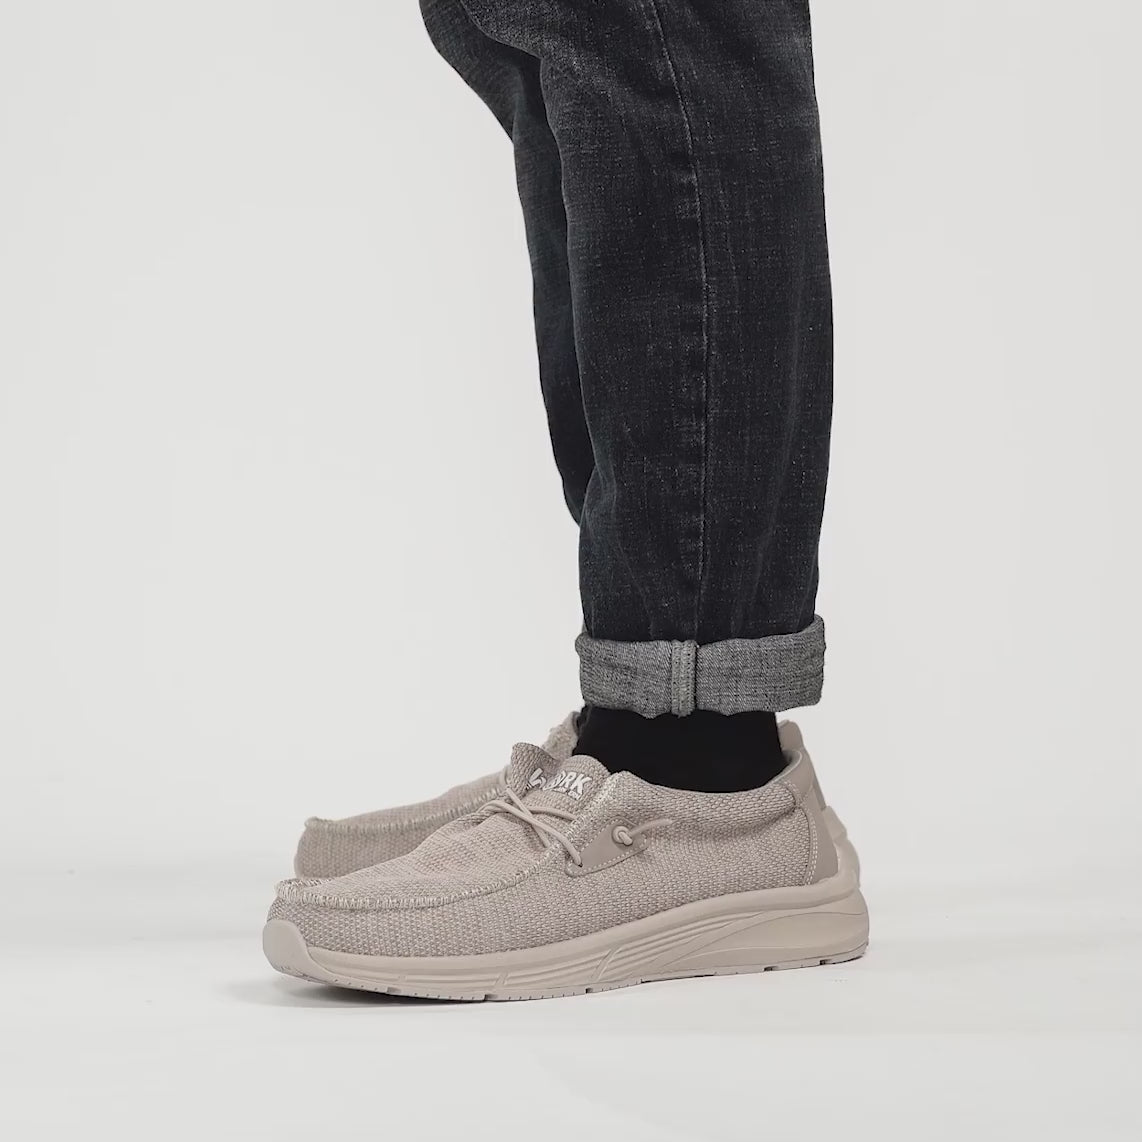 Men's Loafers Canvas Slip On Work Shoes, Slip Resistant Sneakers Food